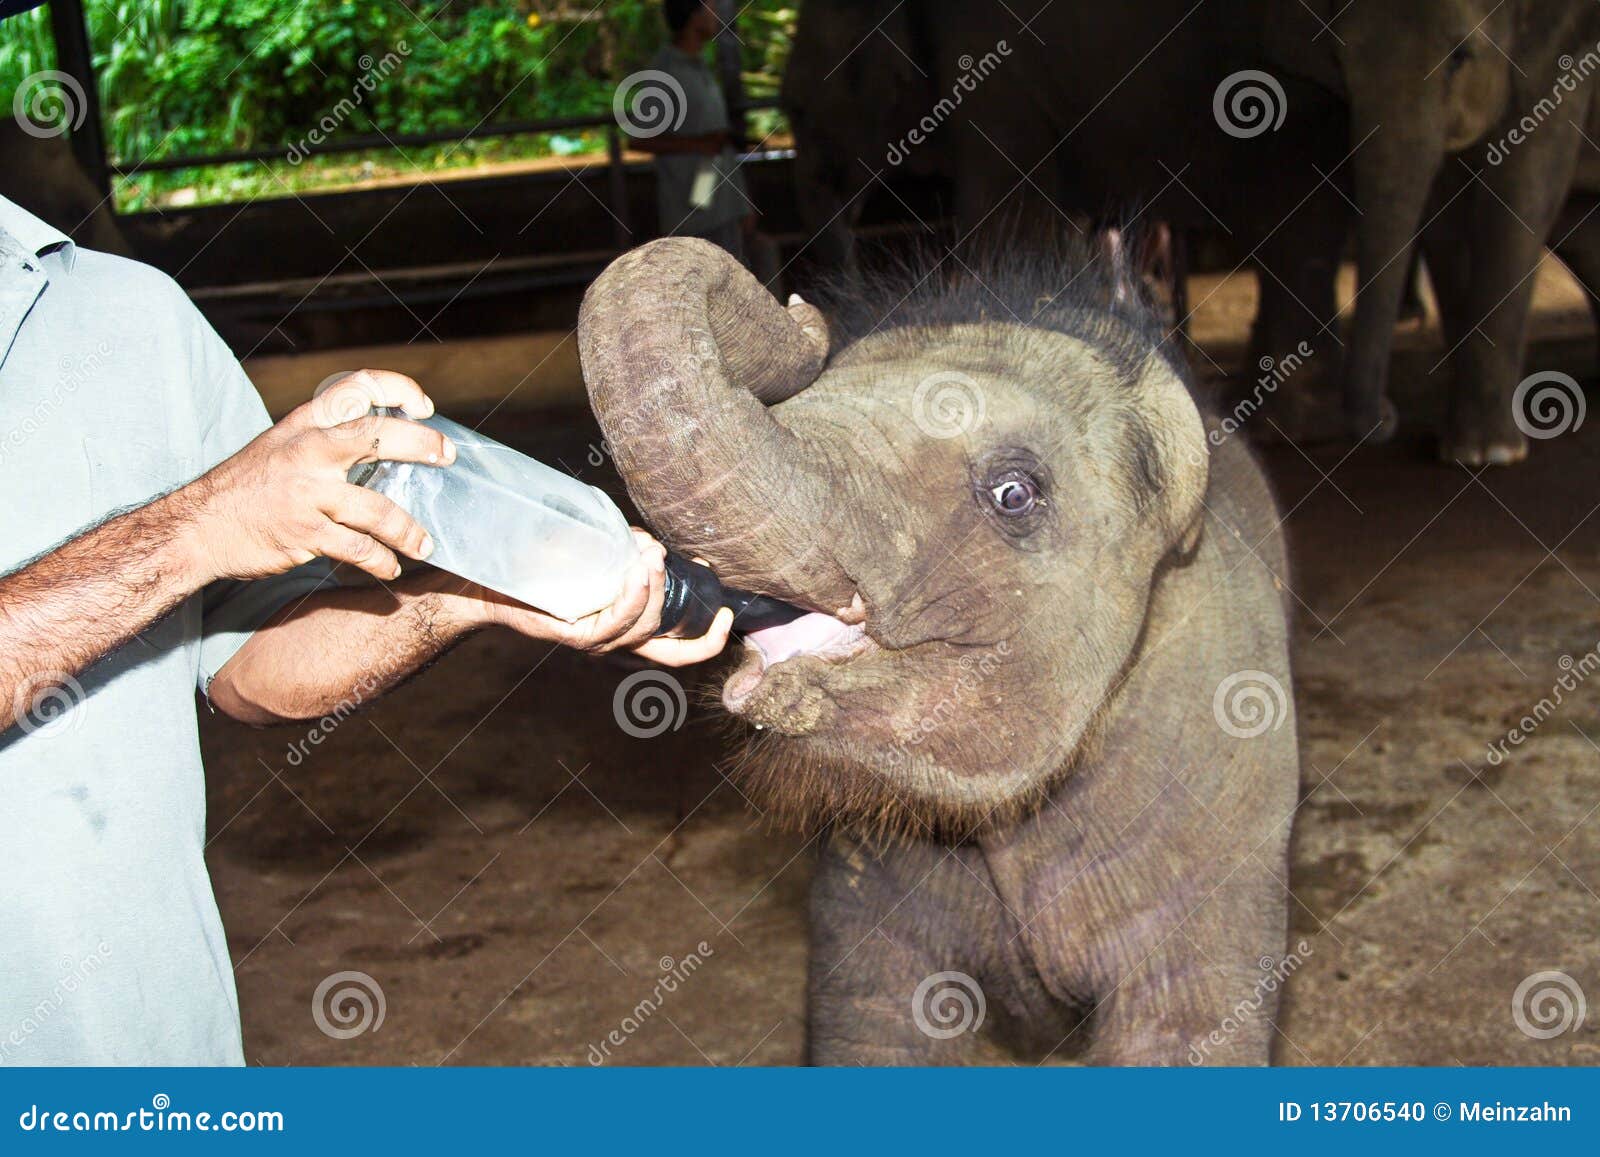 feeding elefant baby with milk